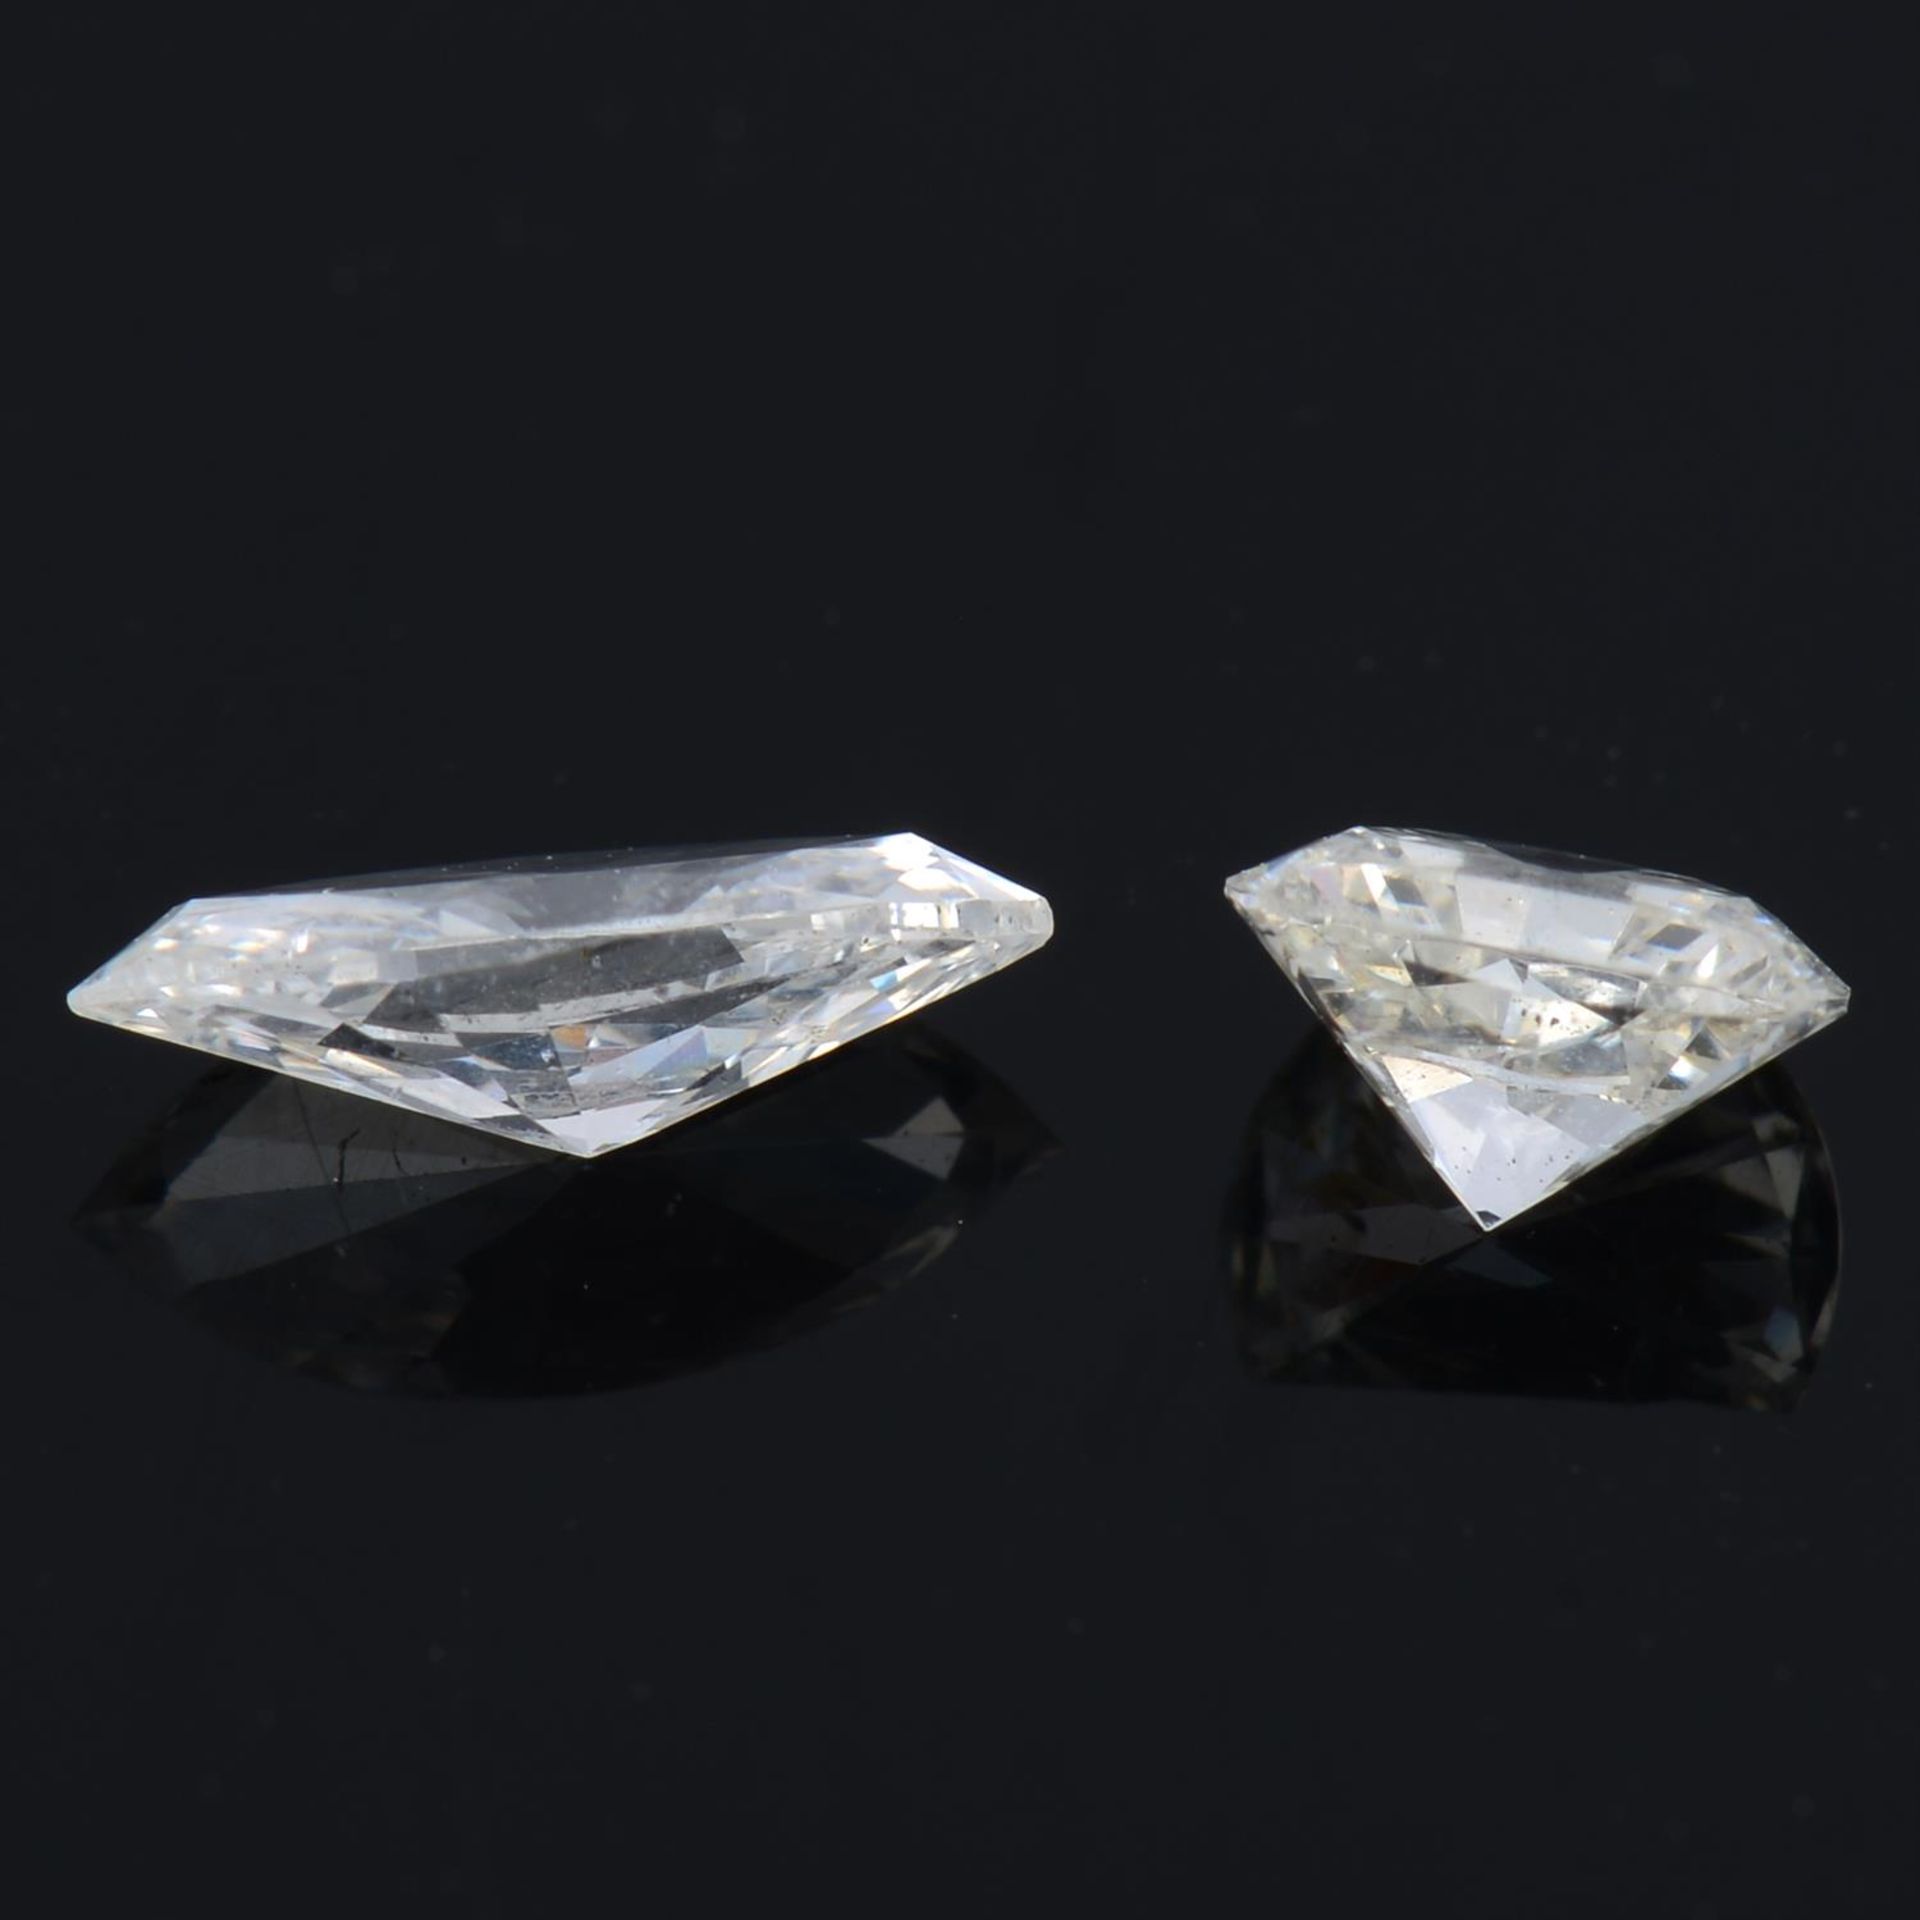 Two fancy-shape diamonds, 0.48ct - Image 2 of 2